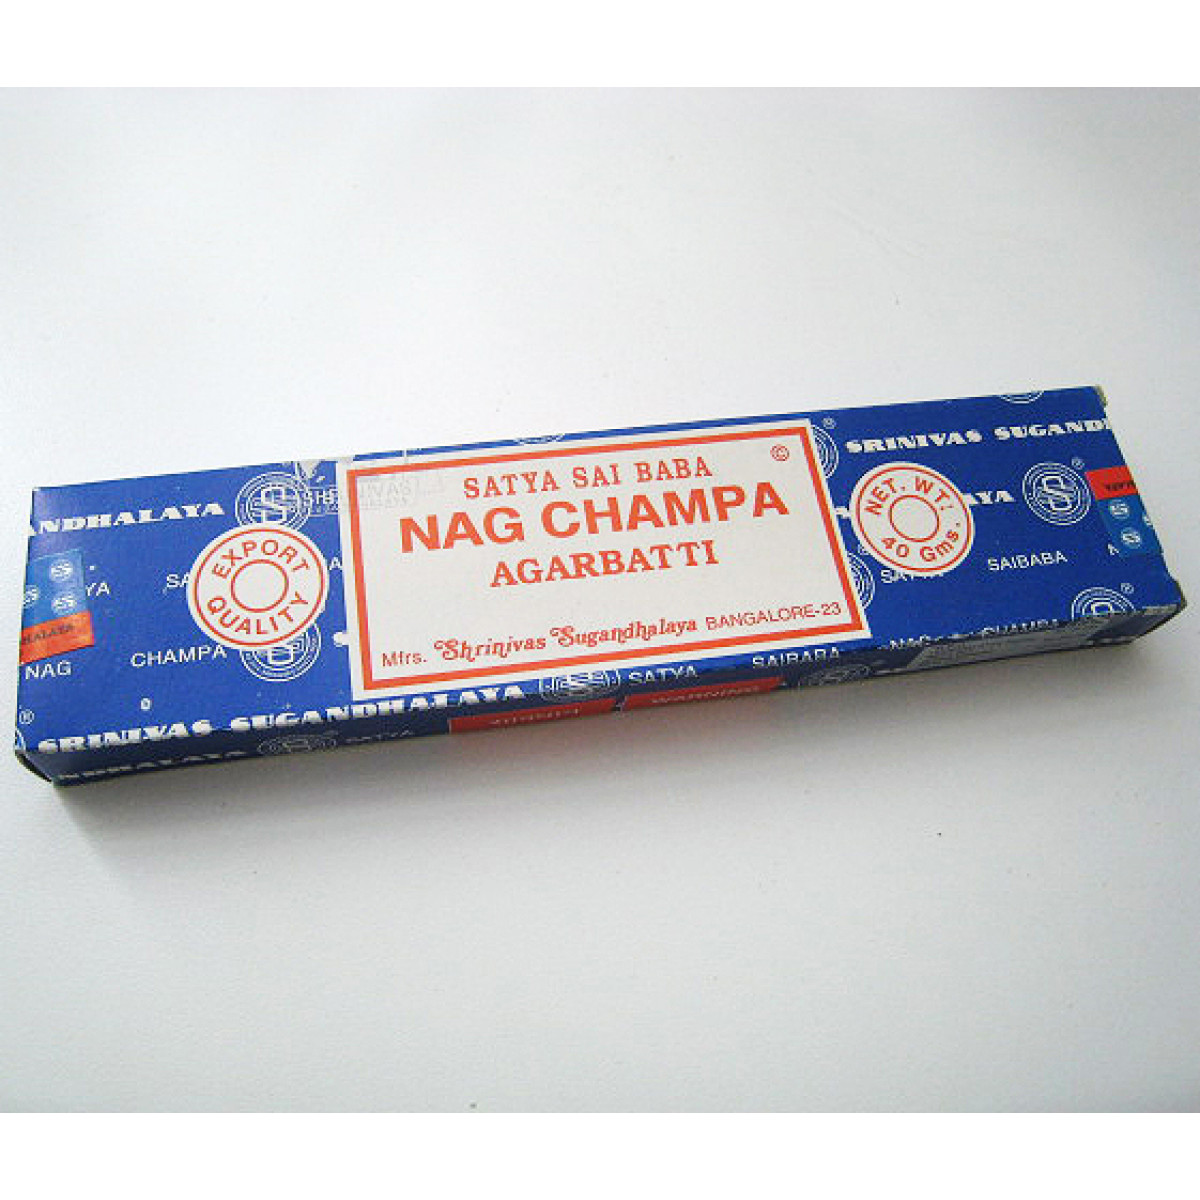 Nag Champa Sai Baba 40 g / 12er Pack